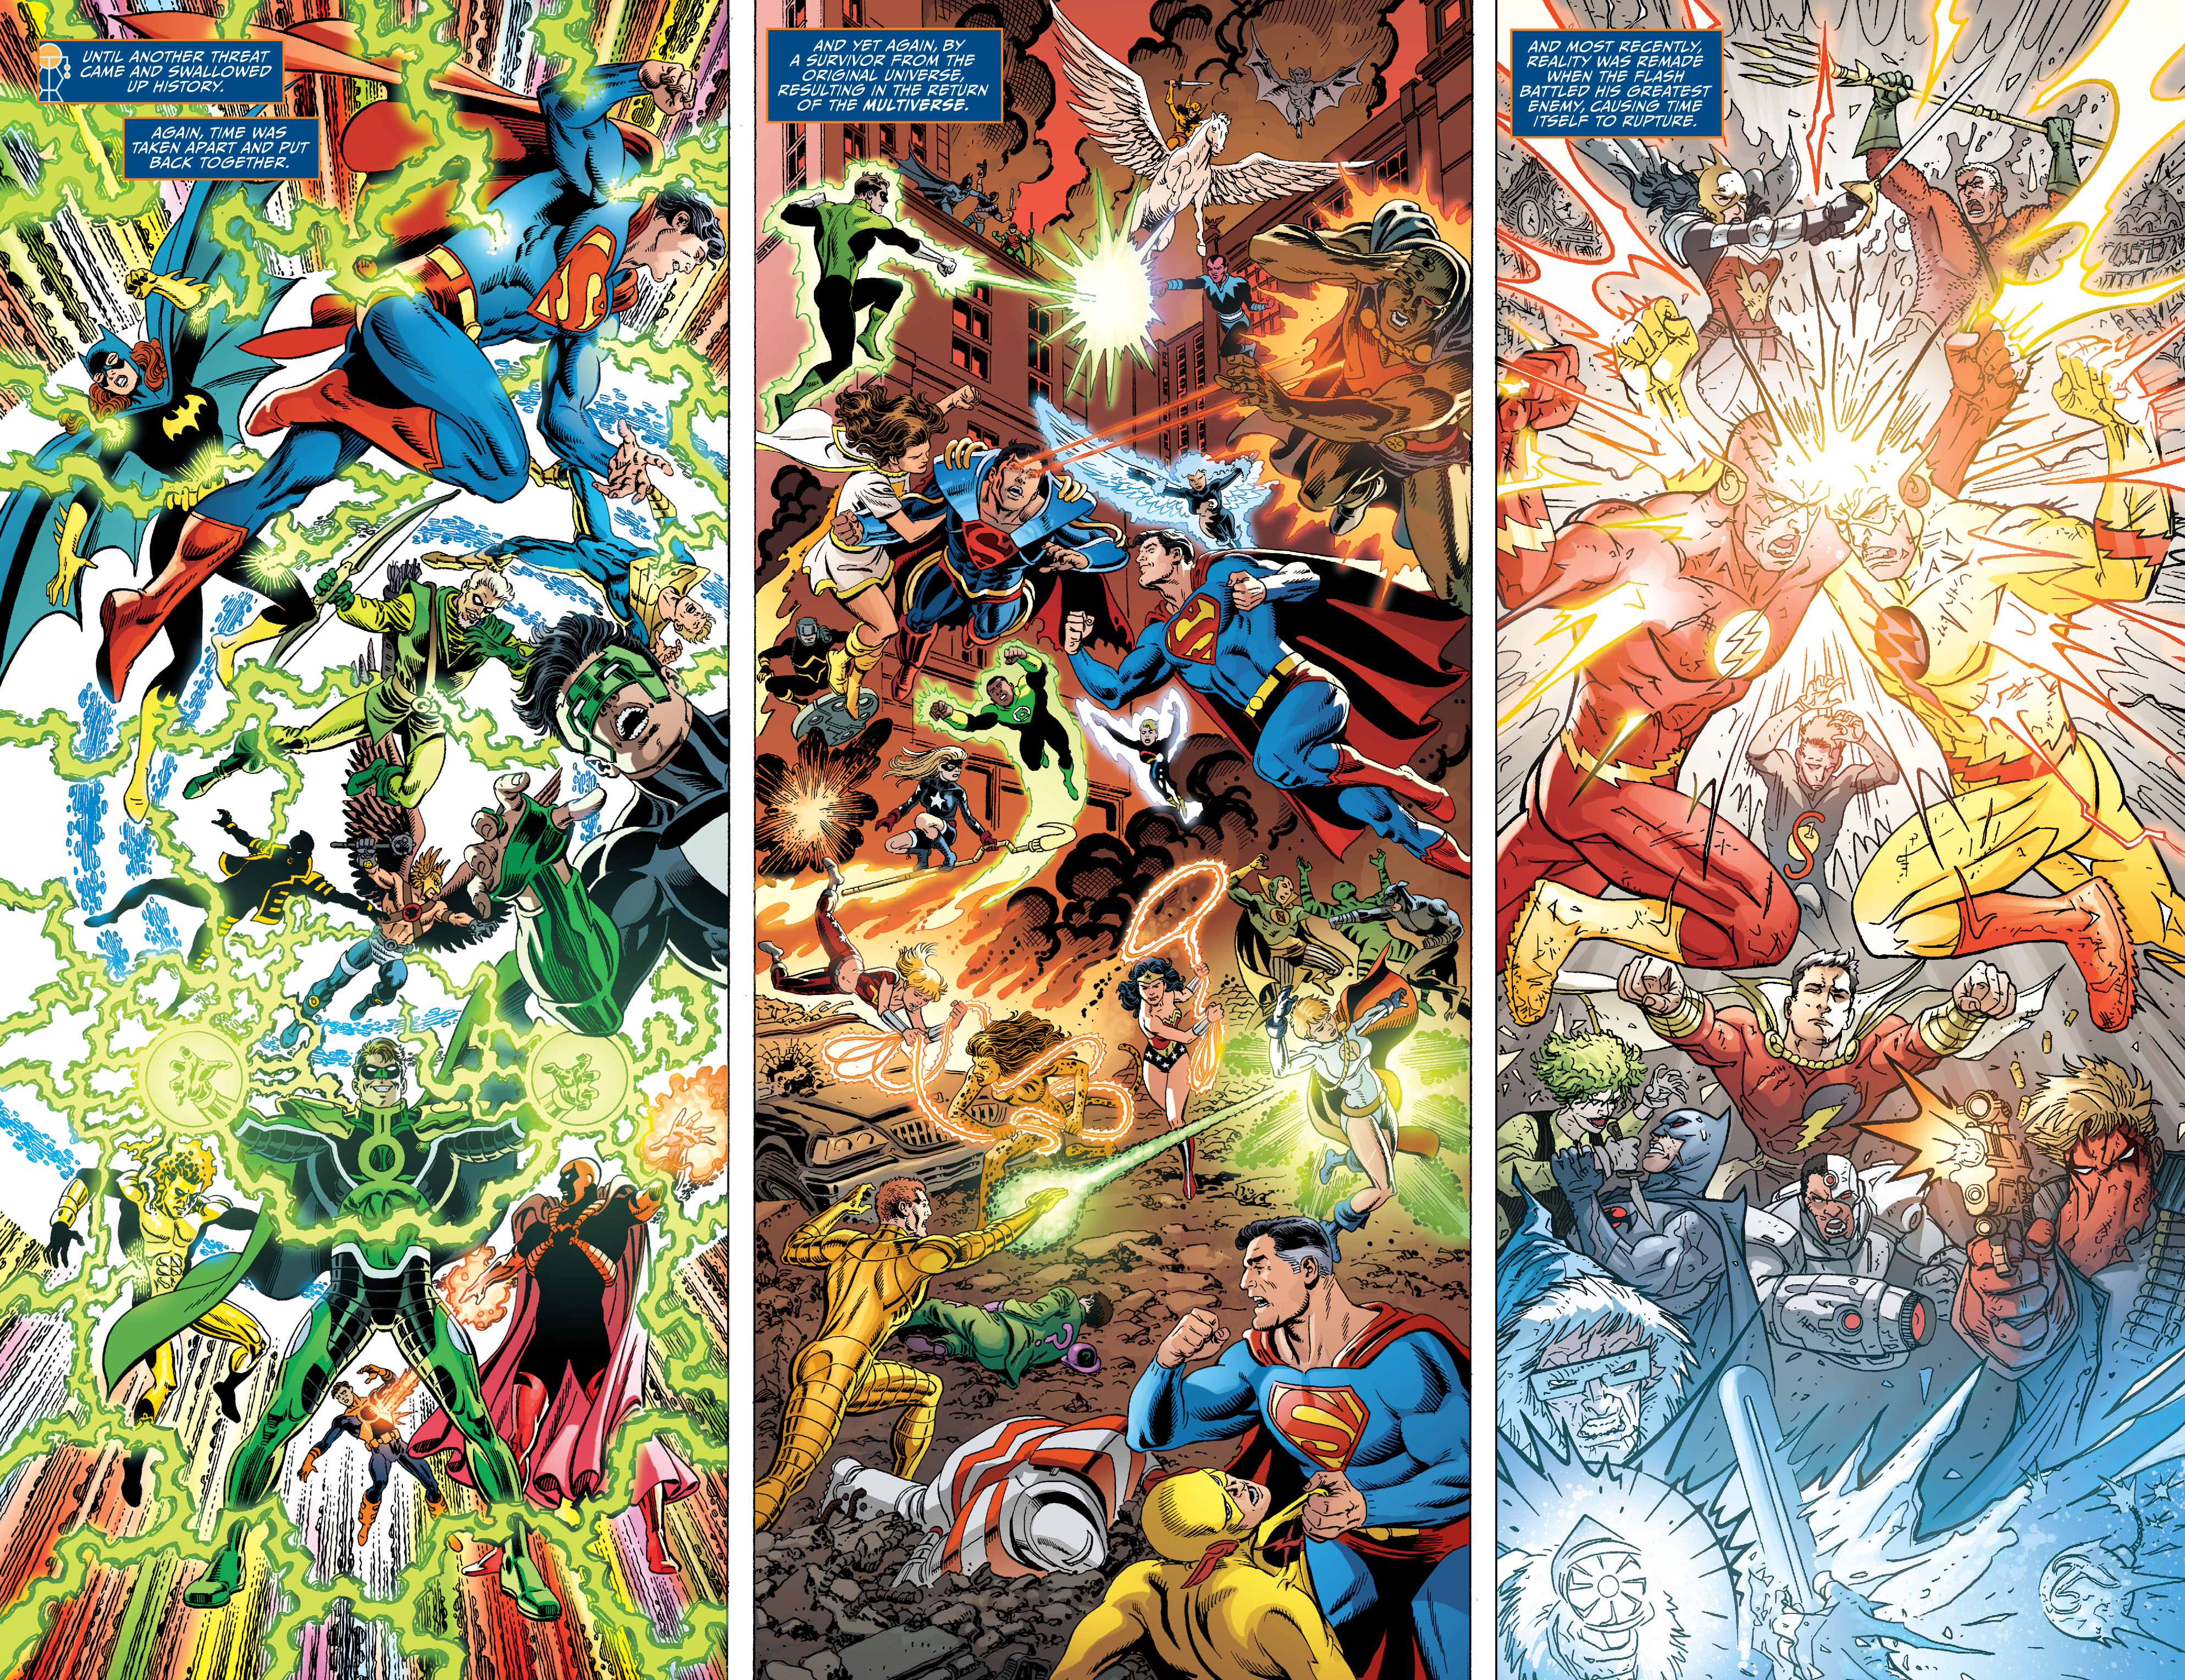 Back to the multiverse. DC Вселенная New 52. Космология ДС комикс. Лига справедливости New 52. Барри Аллен (расширенная Вселенная DC).